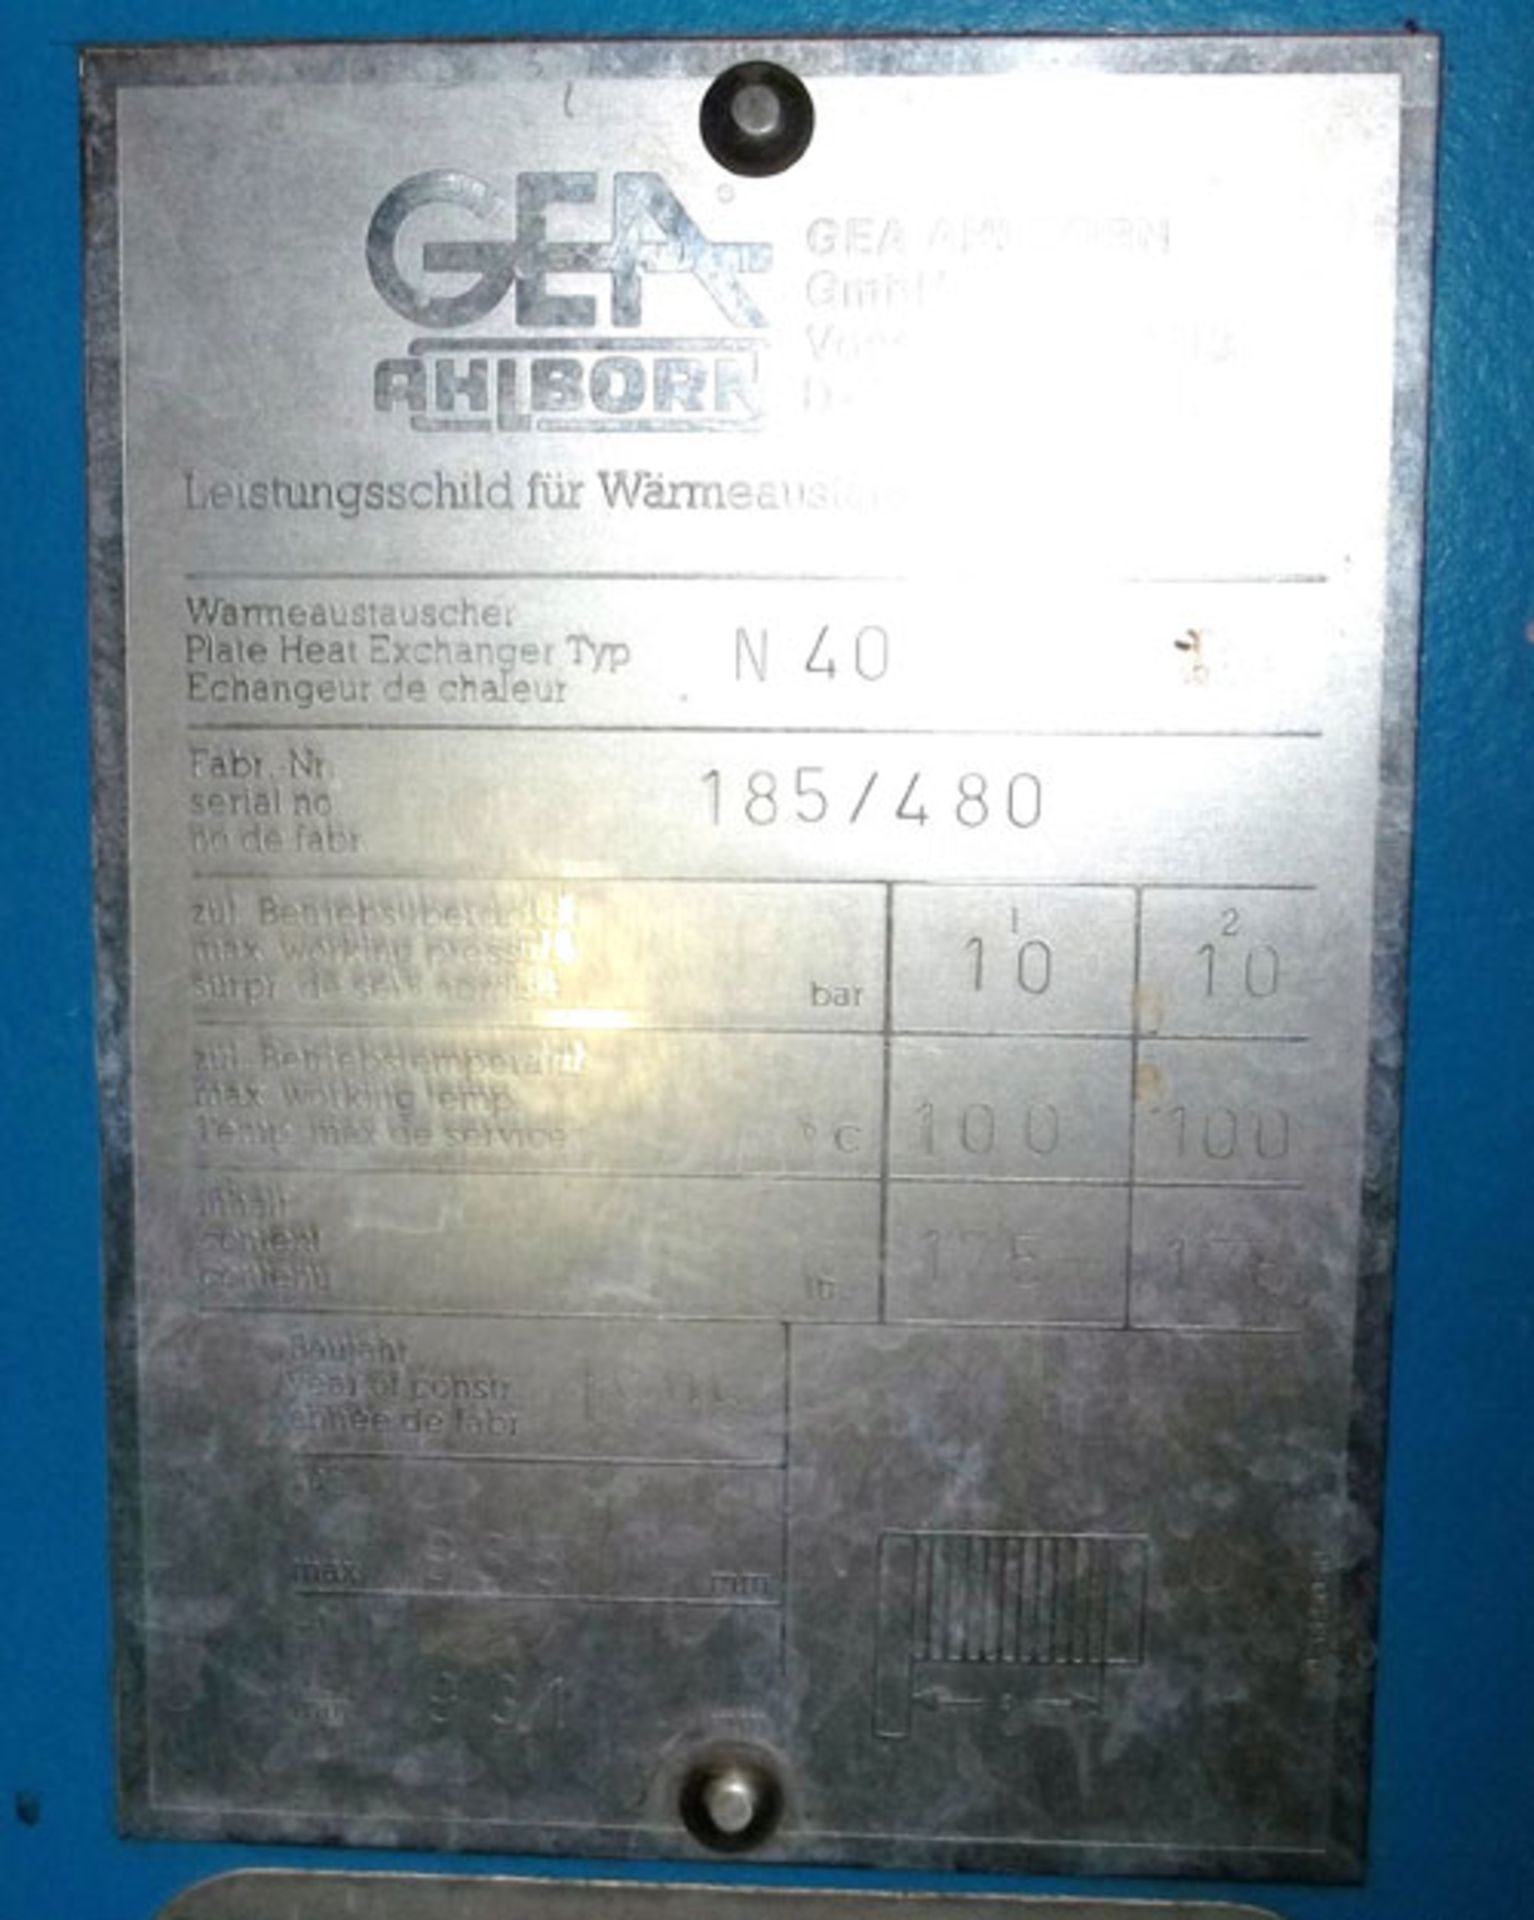 GEA Ahlborn Type N40 Stainless Steel Plate Heat Exchanger. Maximum working pressure 10 bar at 100 - Image 5 of 5